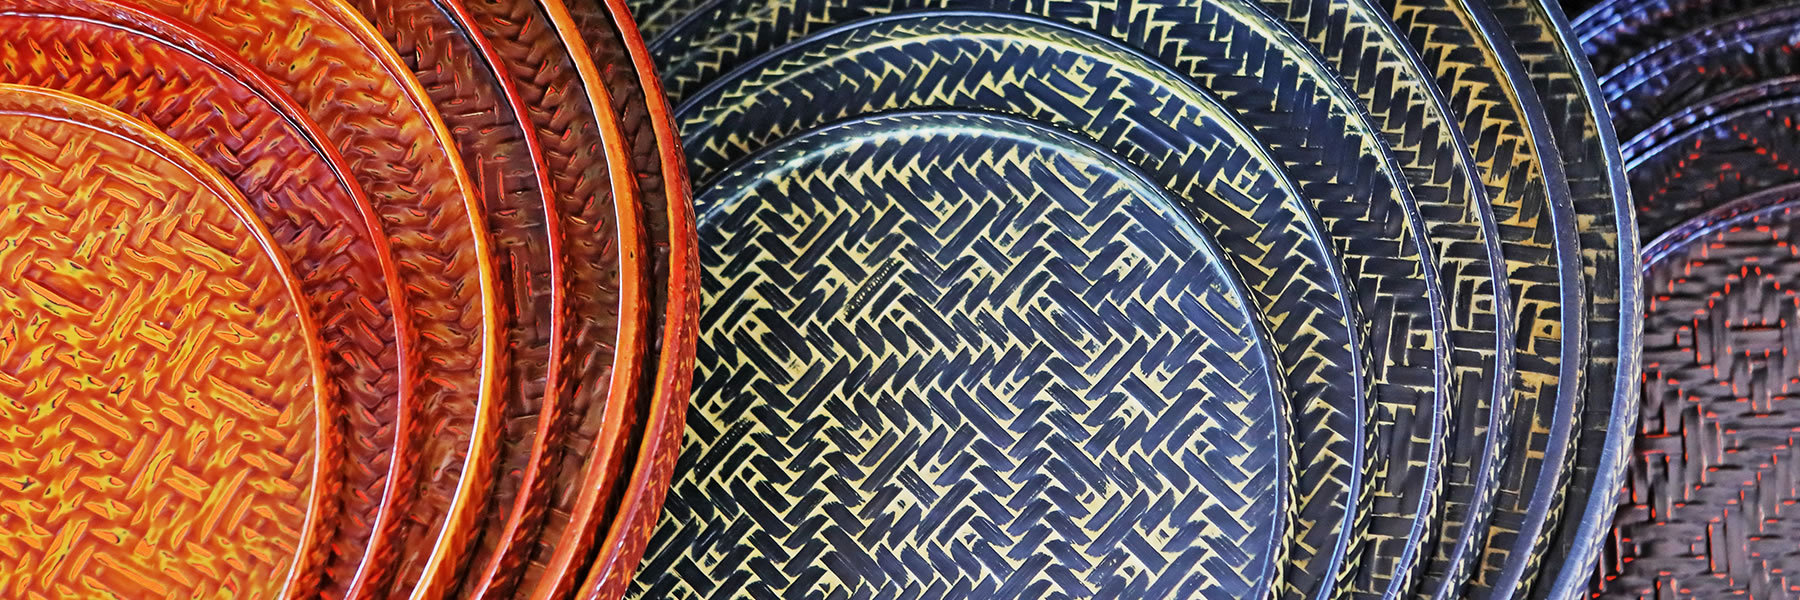 久留米籃胎漆器の画像